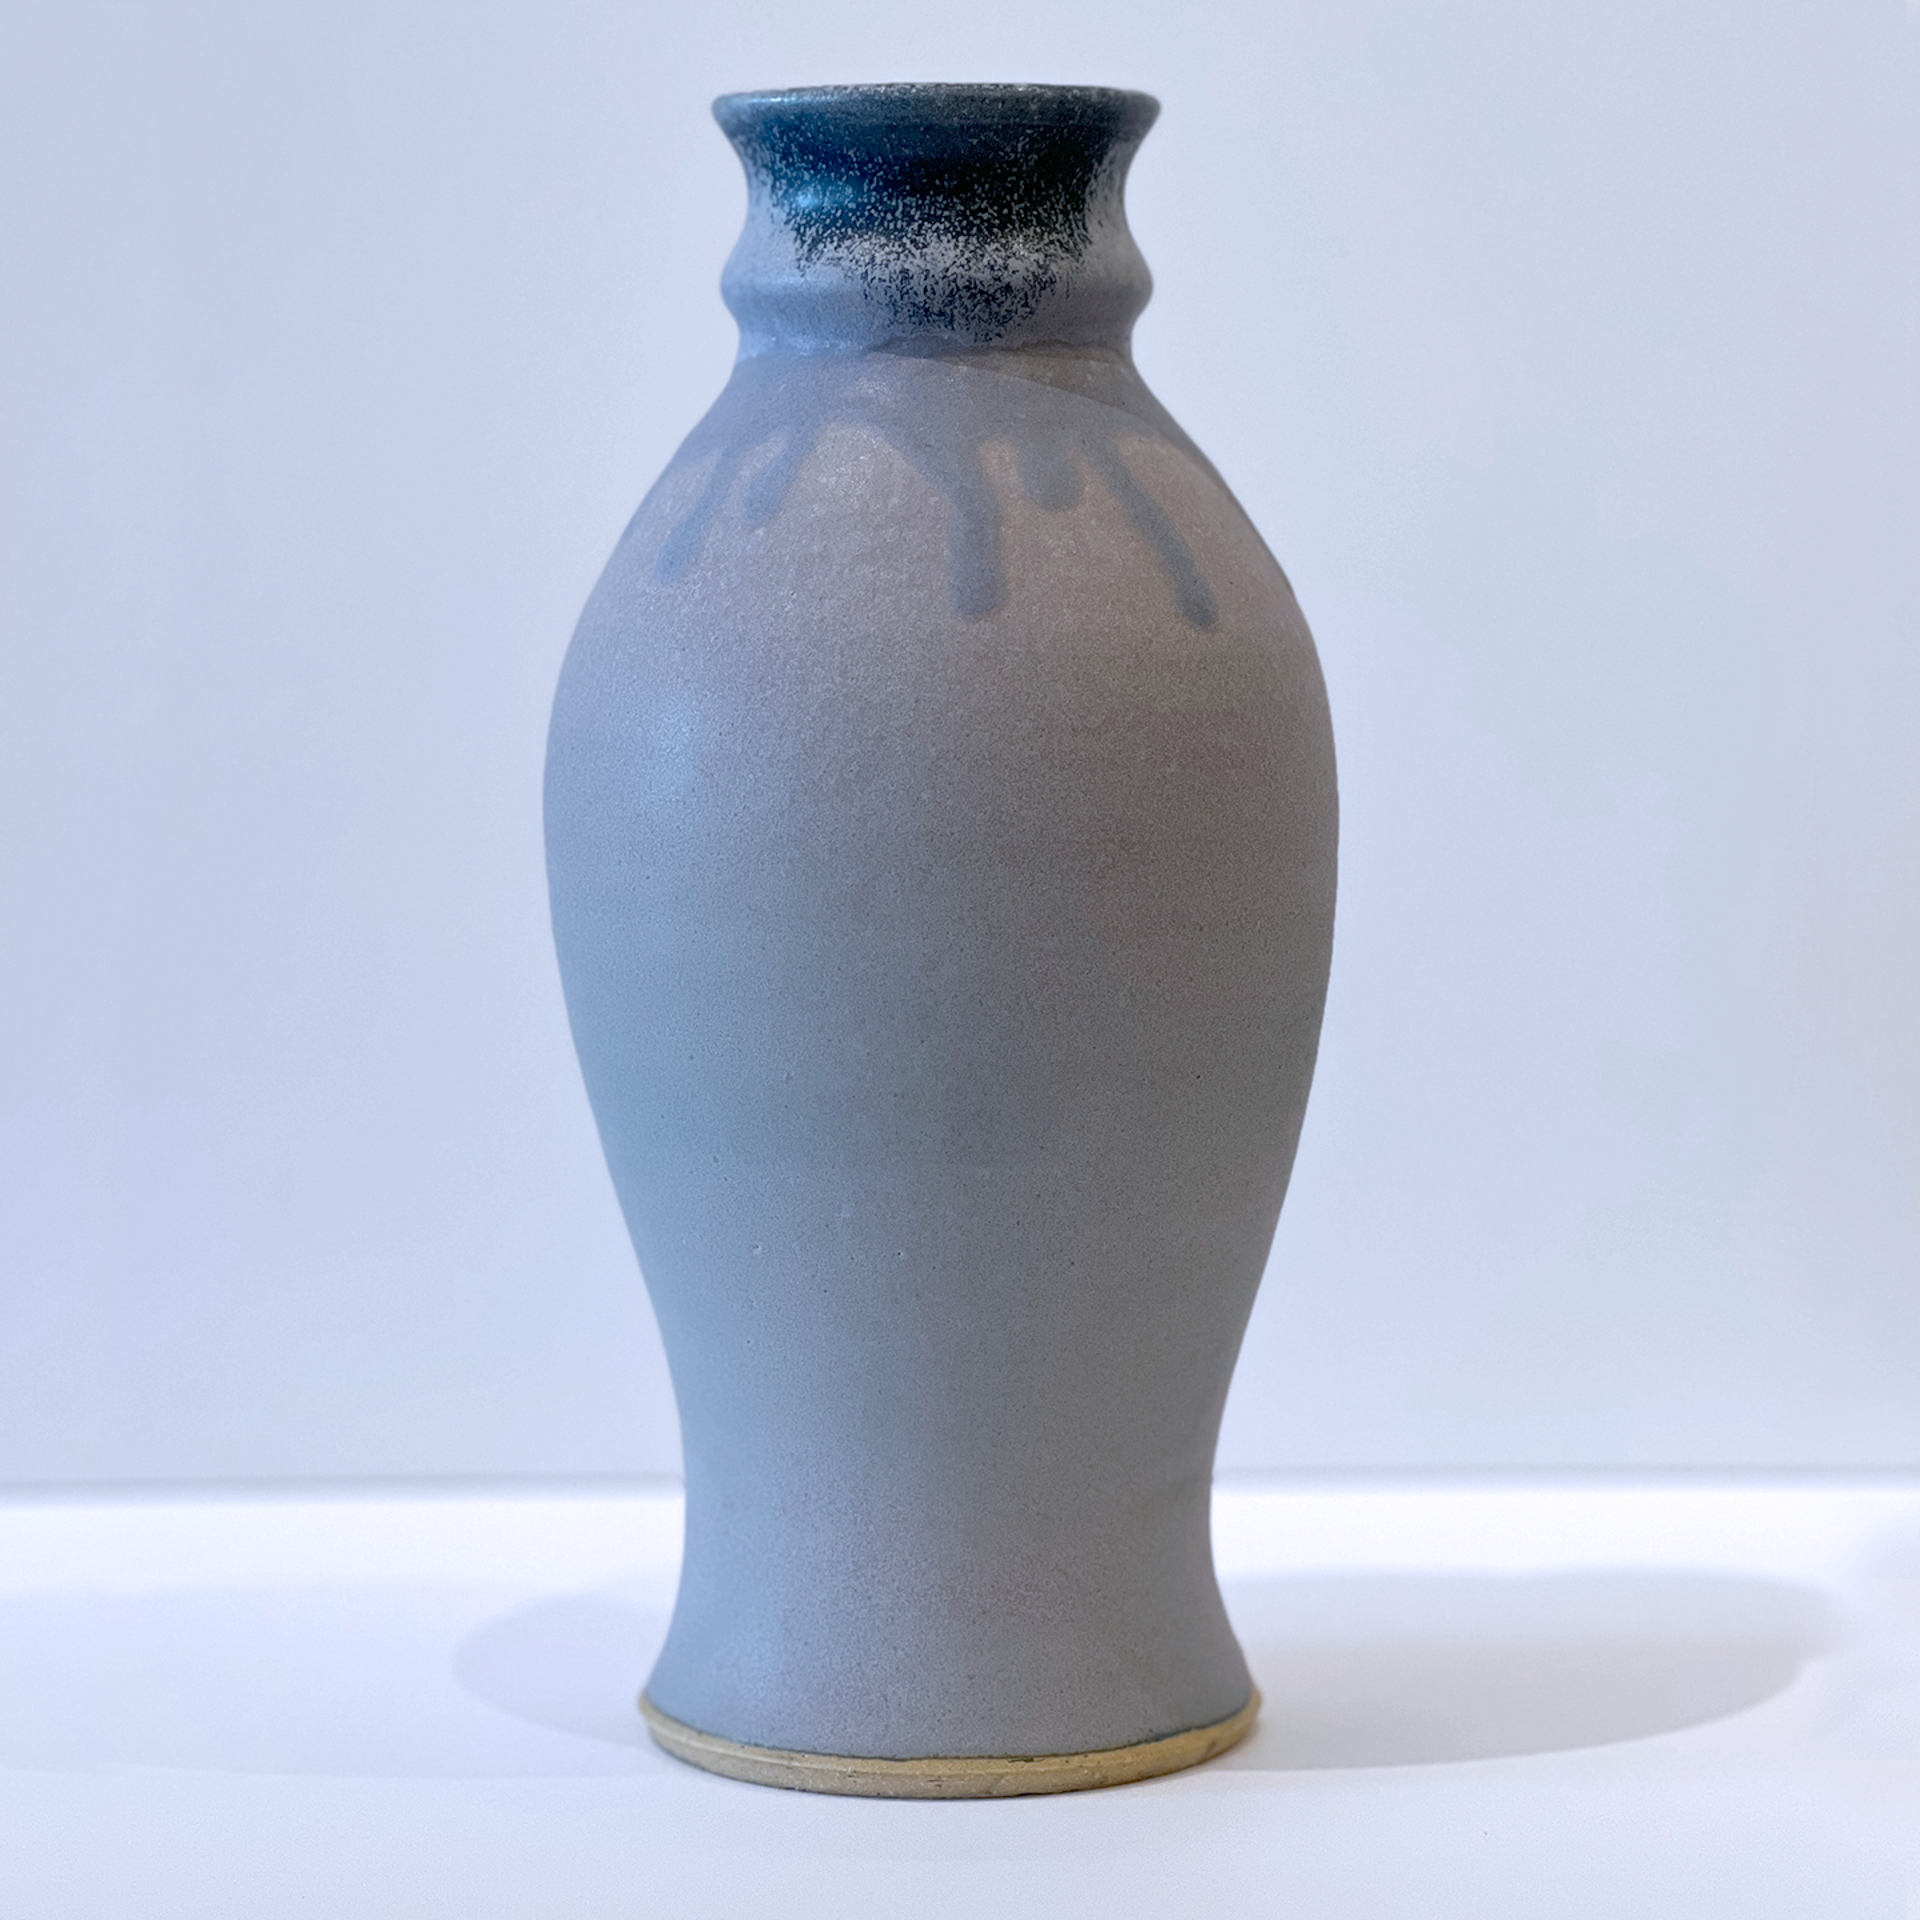 Vase 17 by David LaLomia